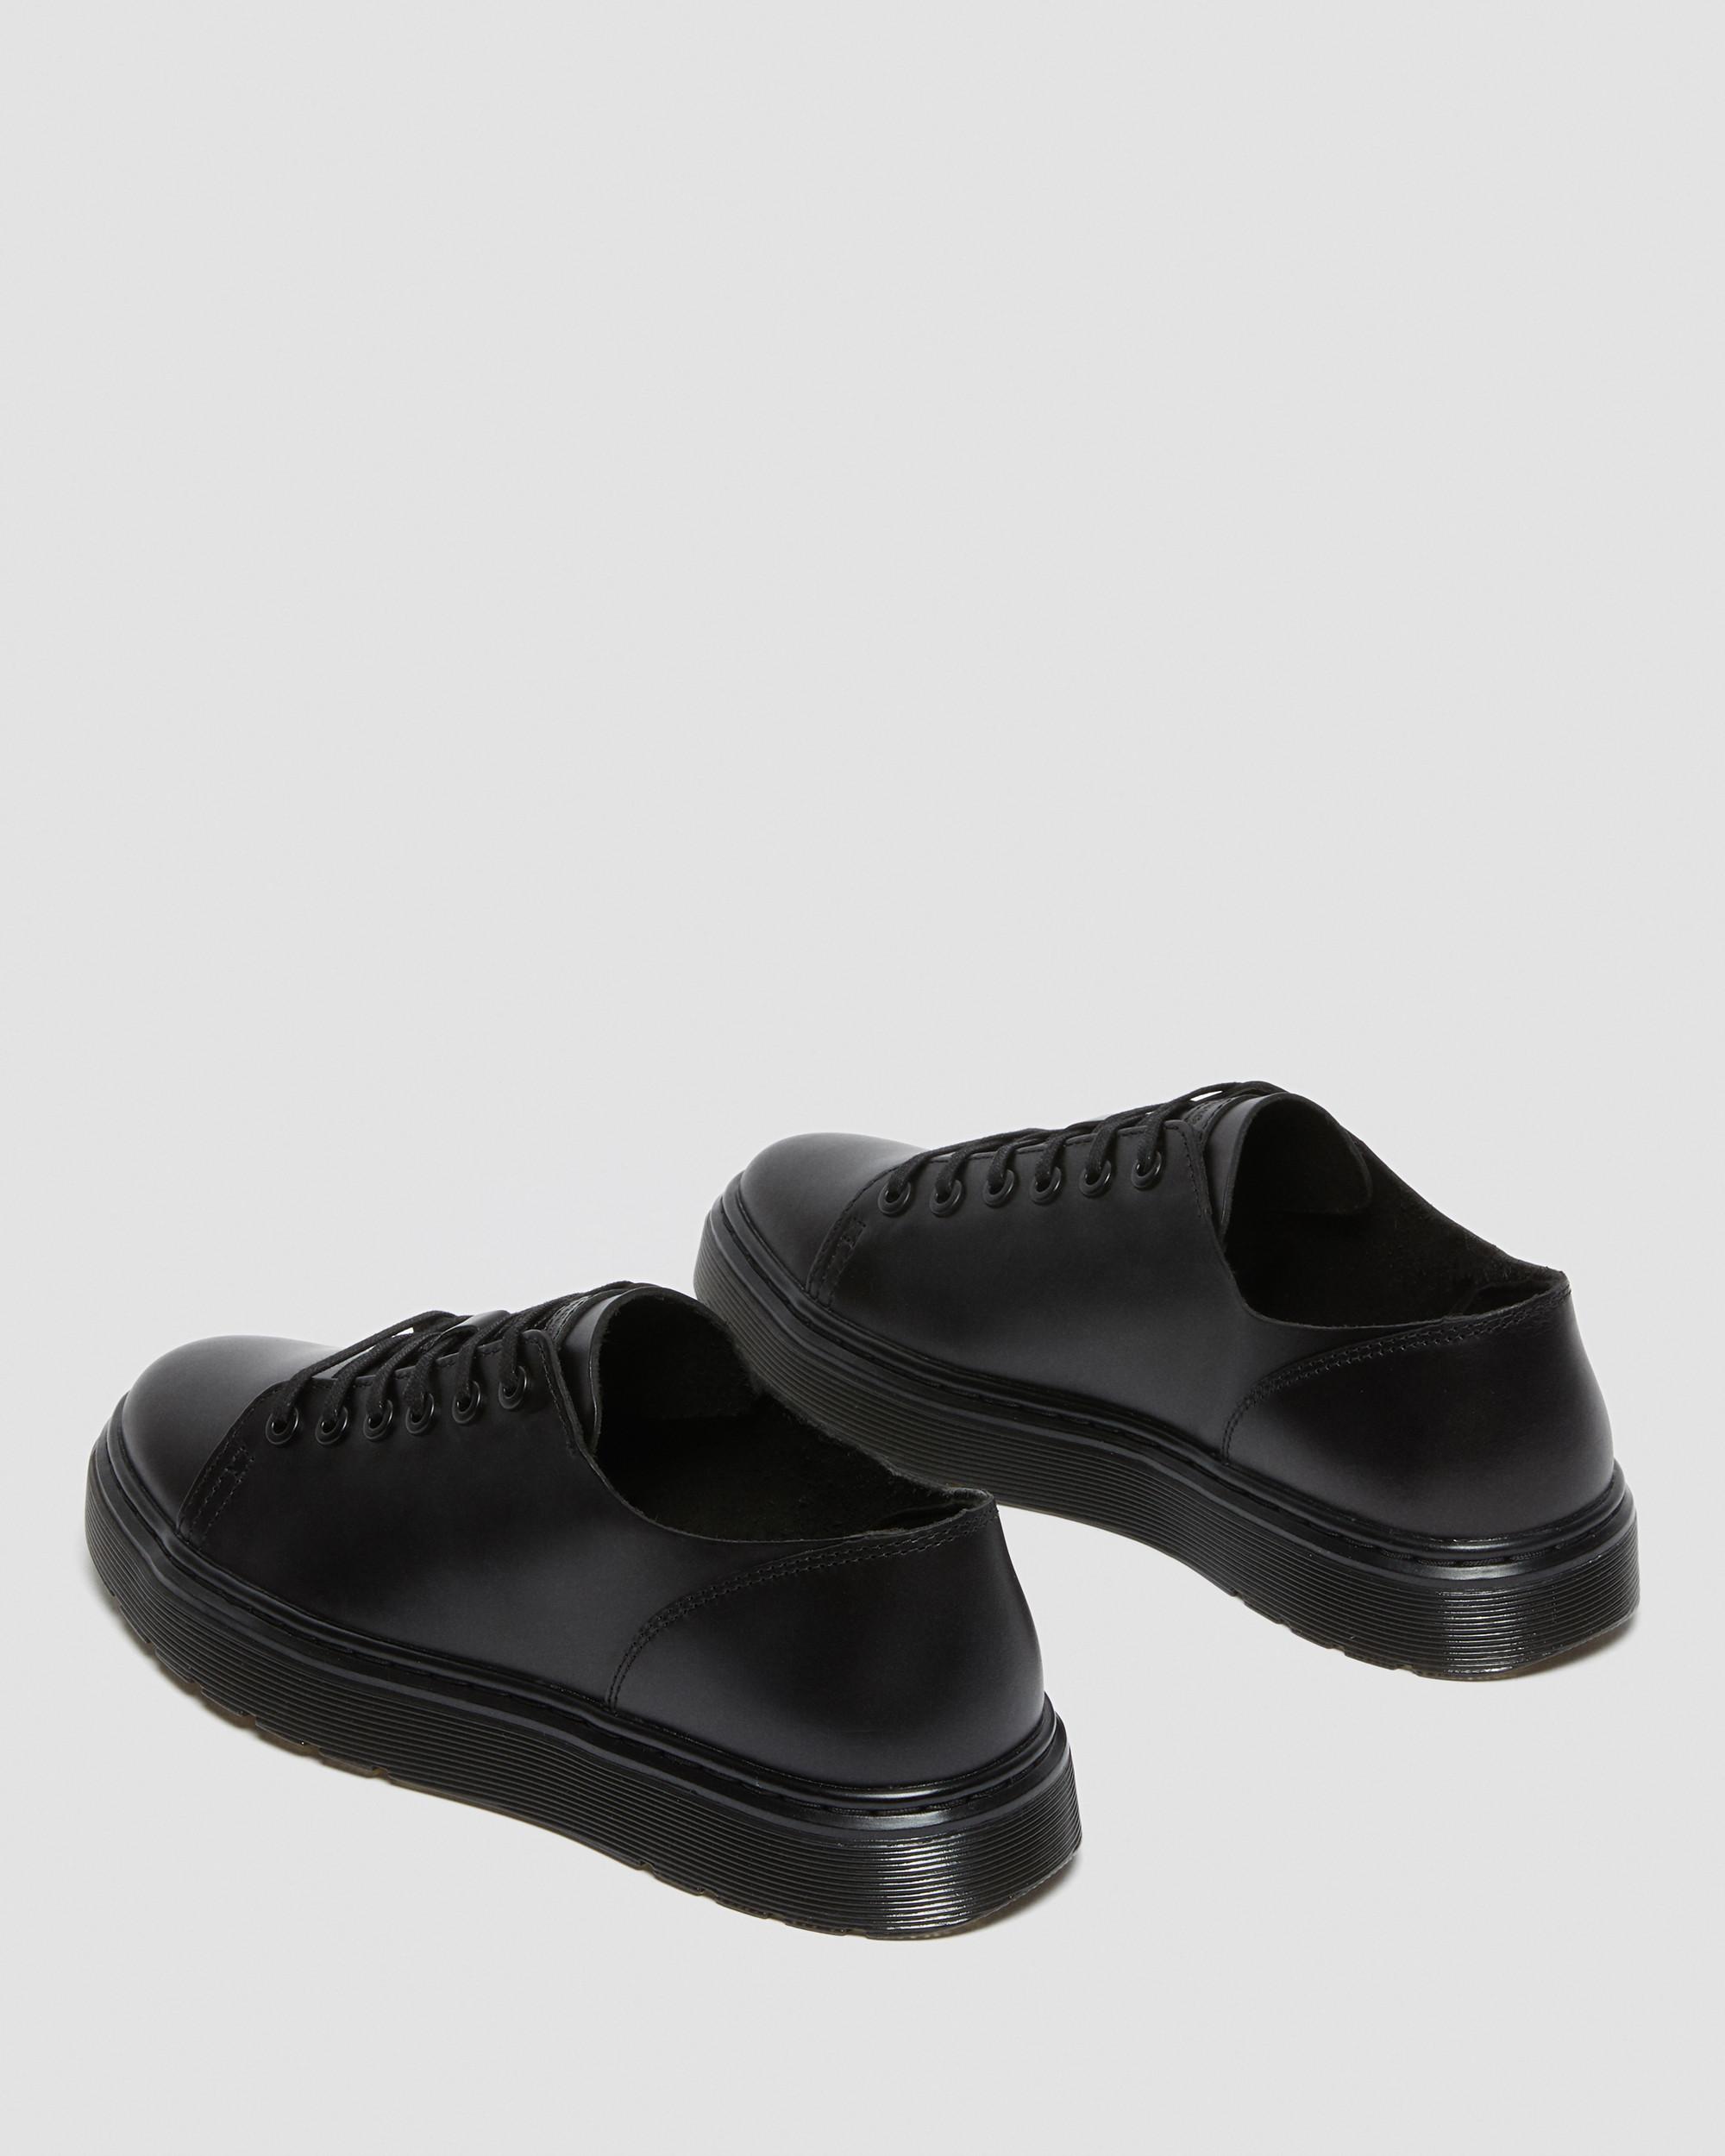 Dante Brando Leather Casual ShoesDante Brando Leather Casual Shoes Dr. Martens